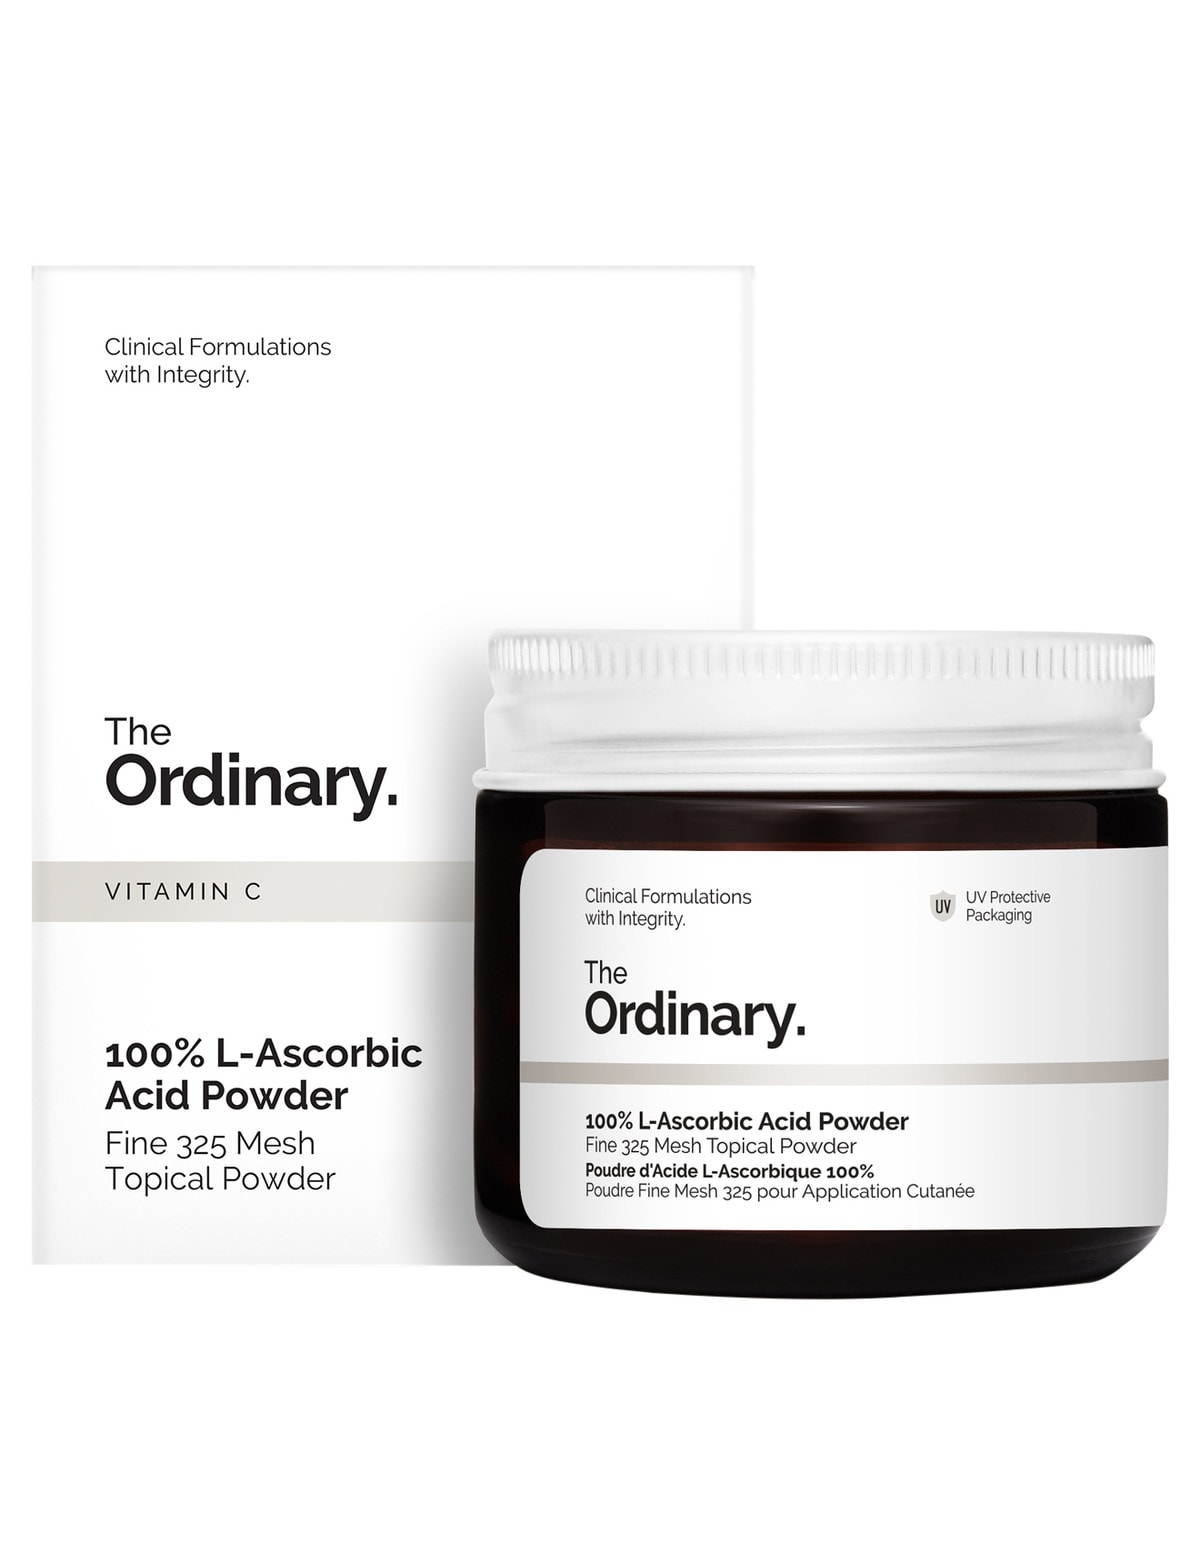 Ordinary 100% L-Ascorbic Acid Powder, 20g - Moisturisers, Serums & Anti-aging